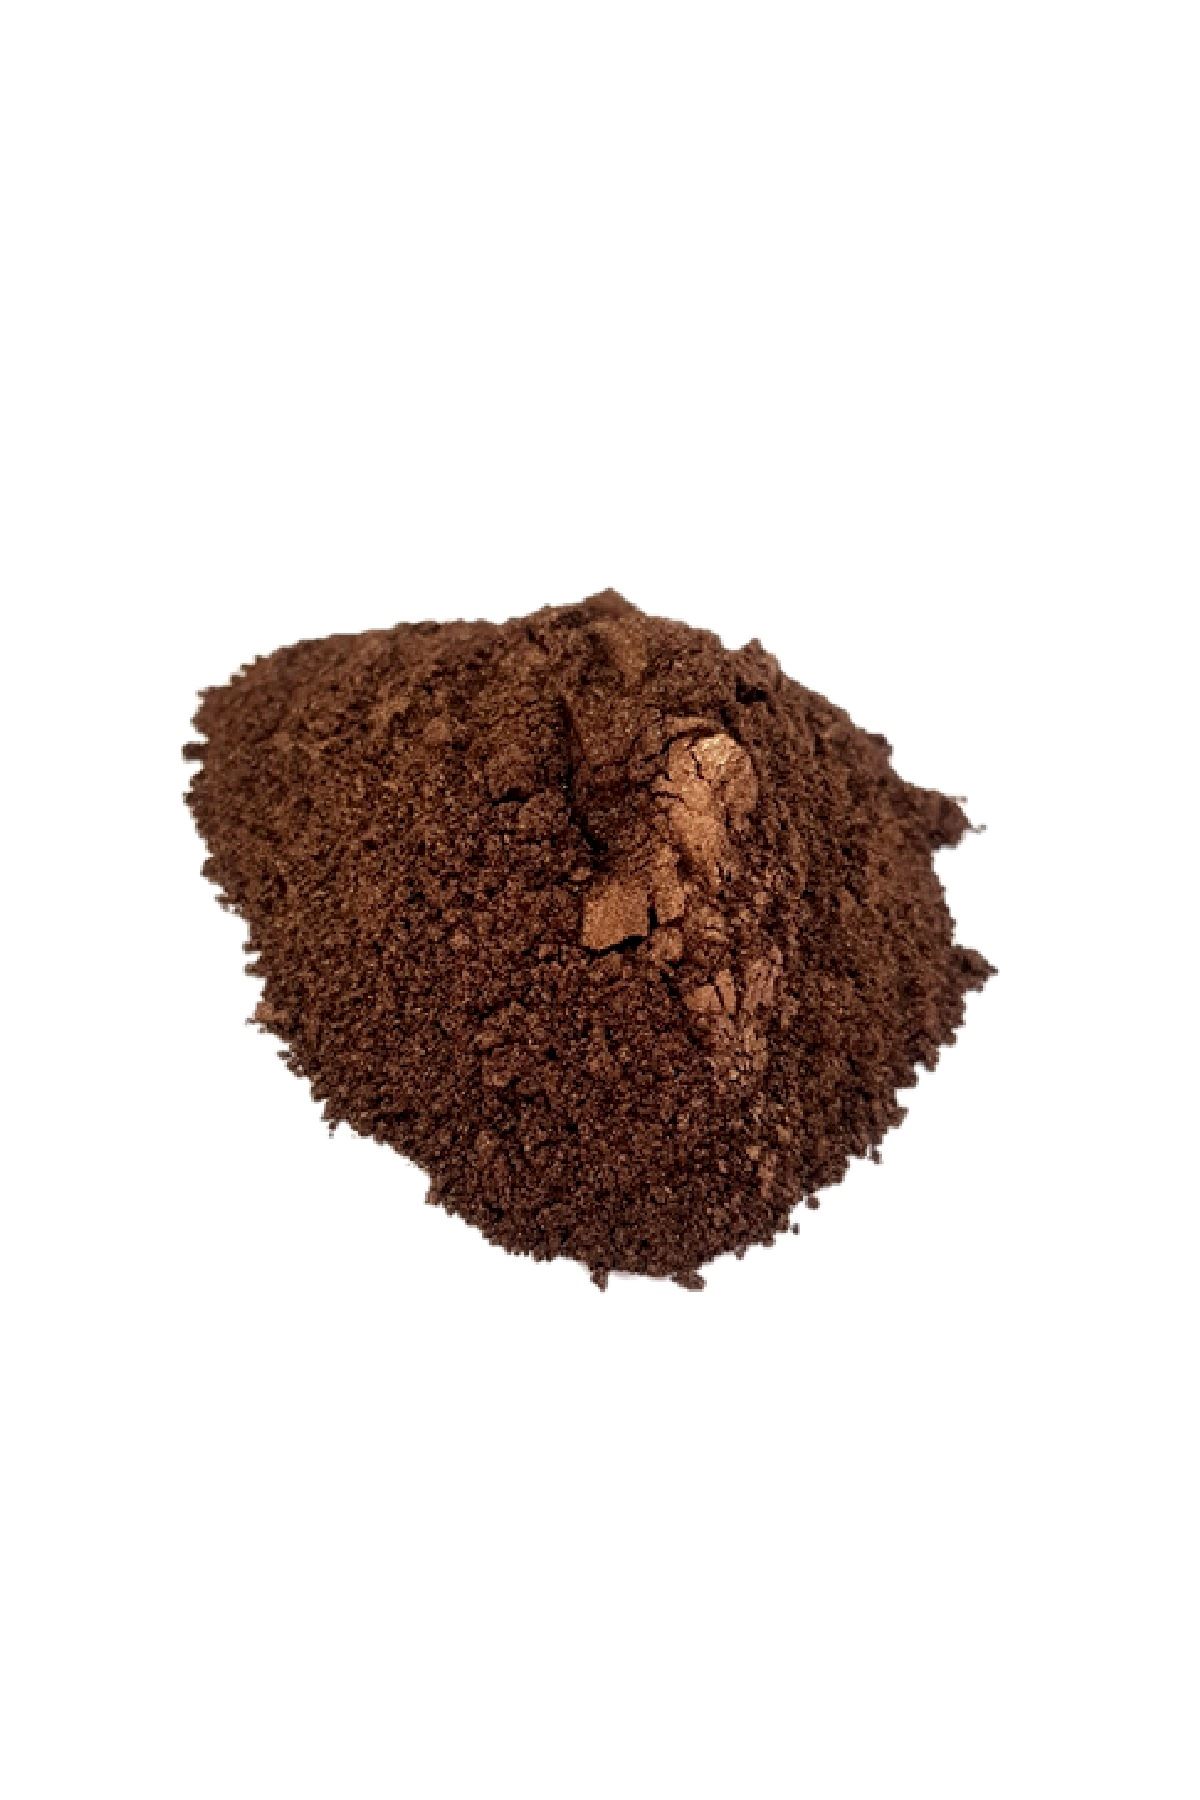 Brtr 10 Gr Chocolate Epoksi Metalik Toz Pigment(kahverengi)